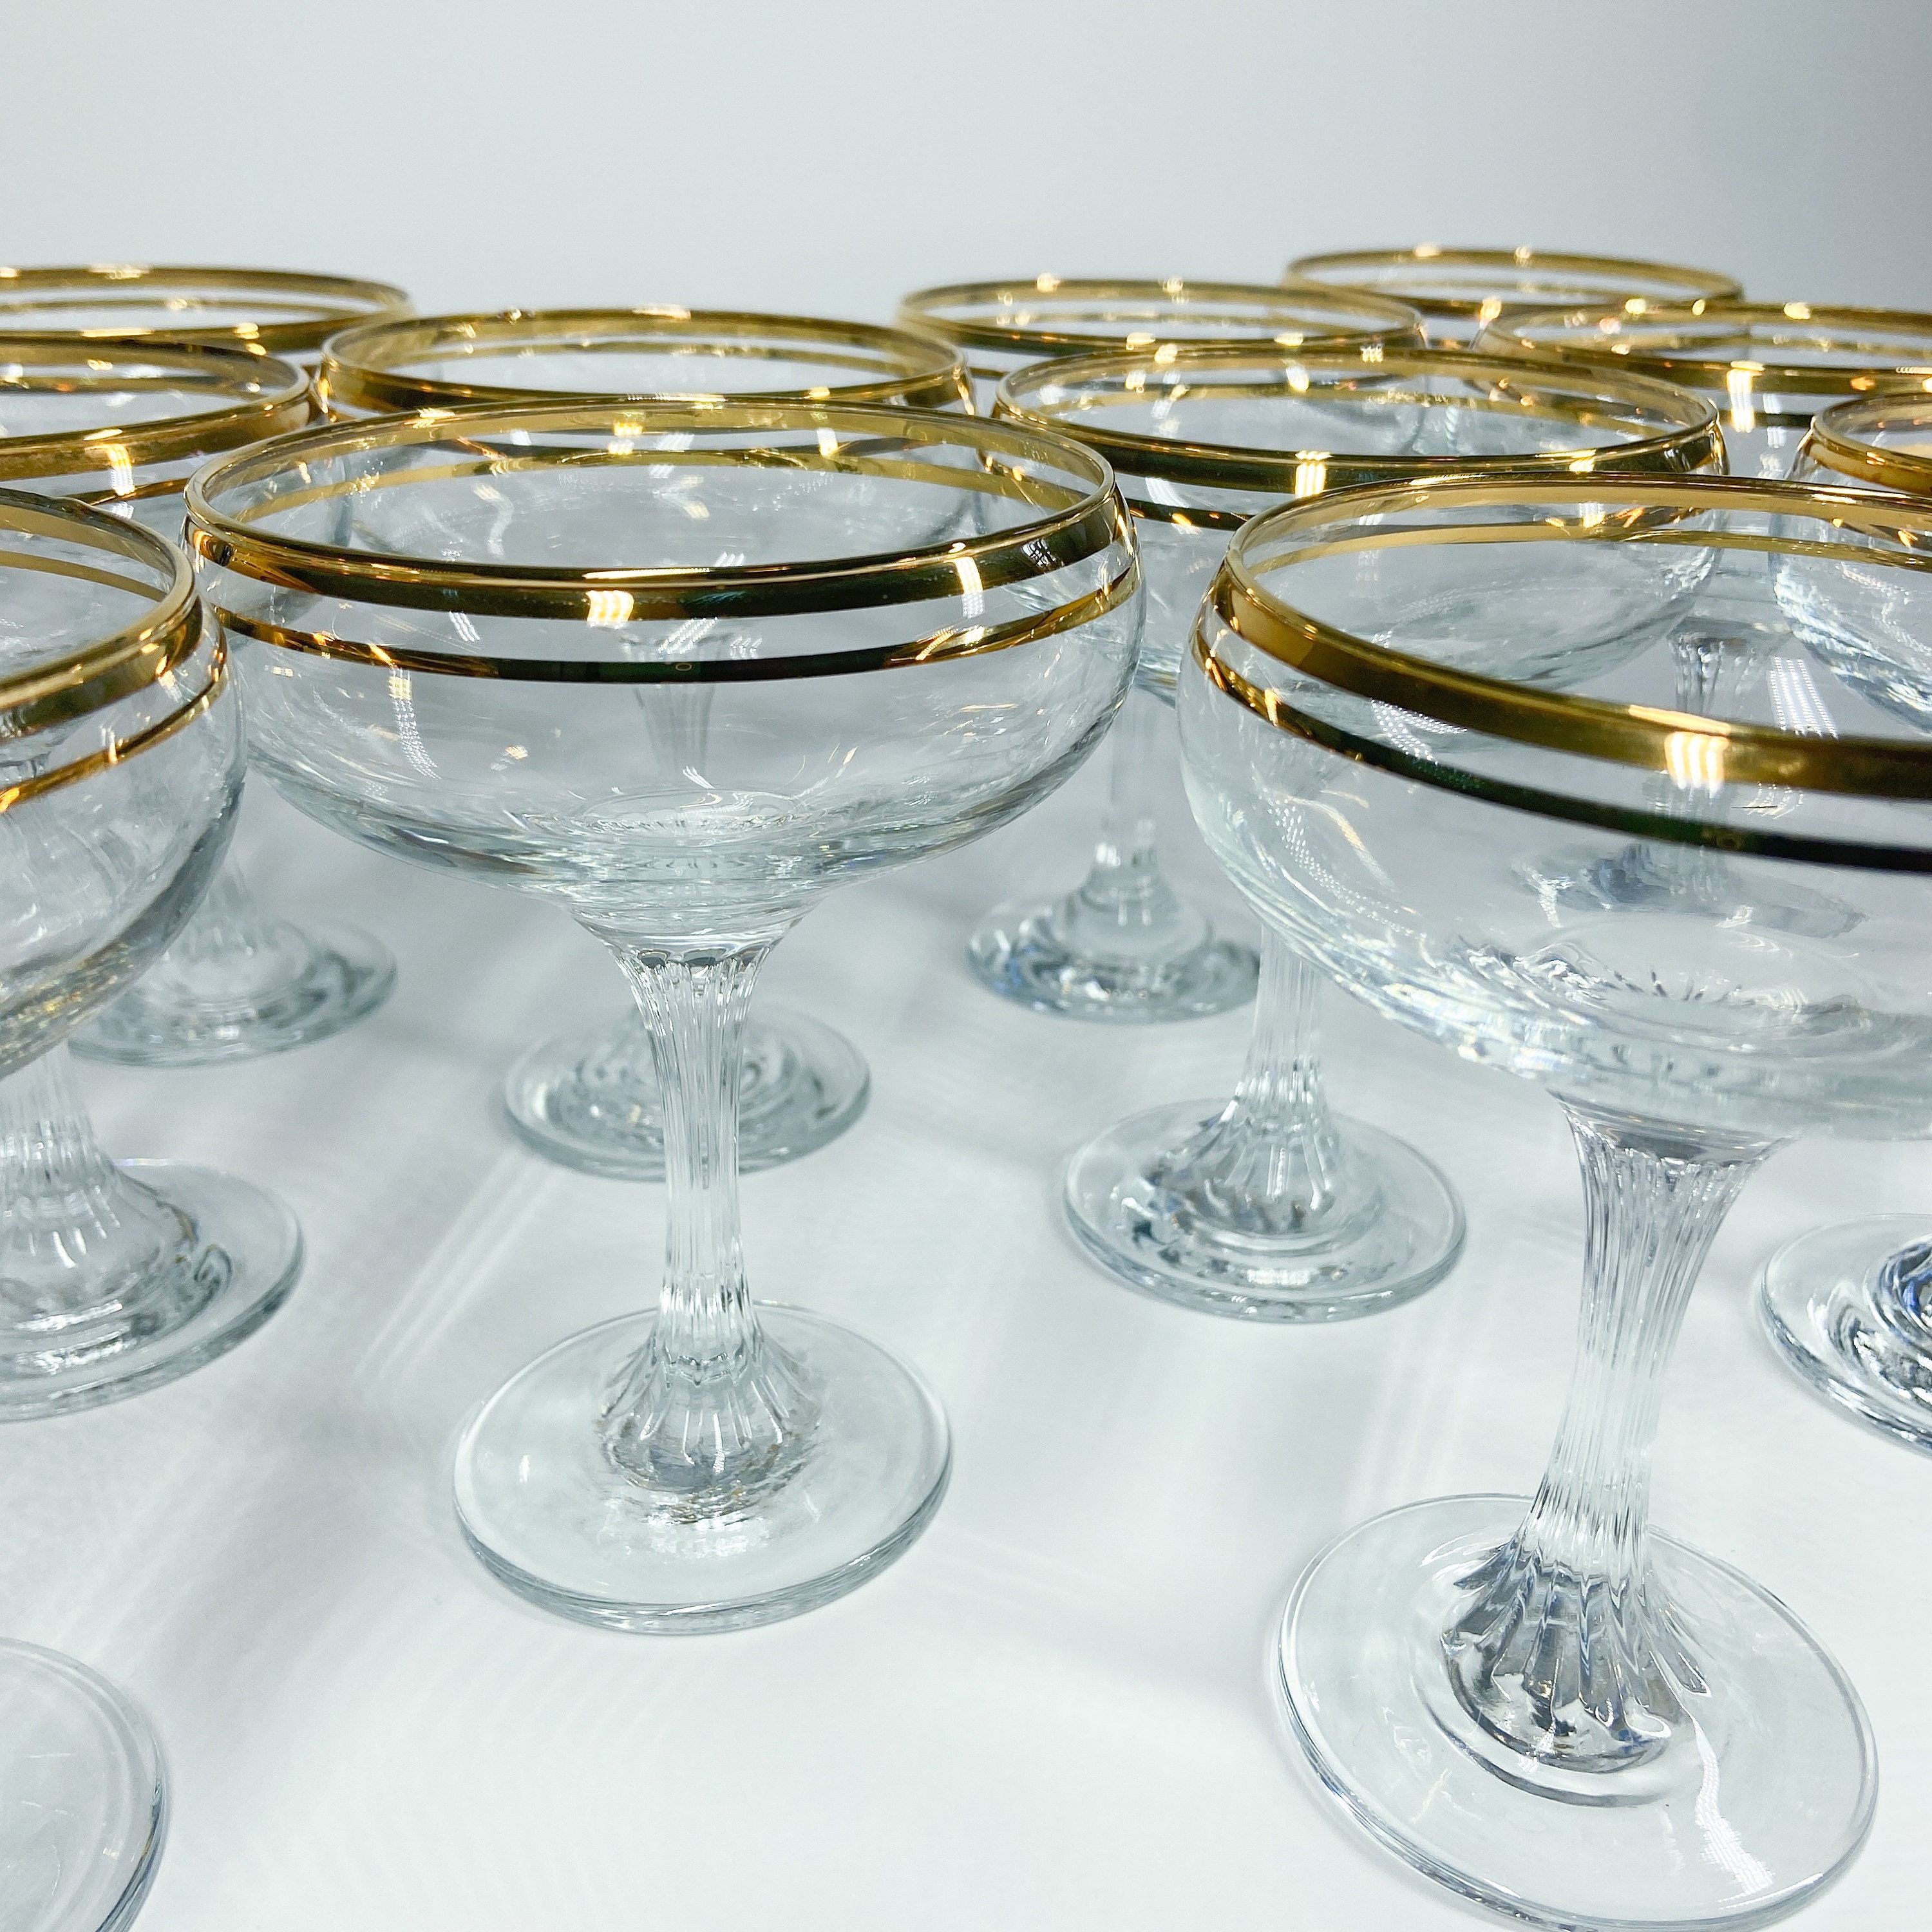 Vintage PINK Gold Rimmed Encrusted Cocktail - Martini Glasses, Set of 4,  1930's Cocktail Glasses, Mixologist glasses, Champagne Glasses